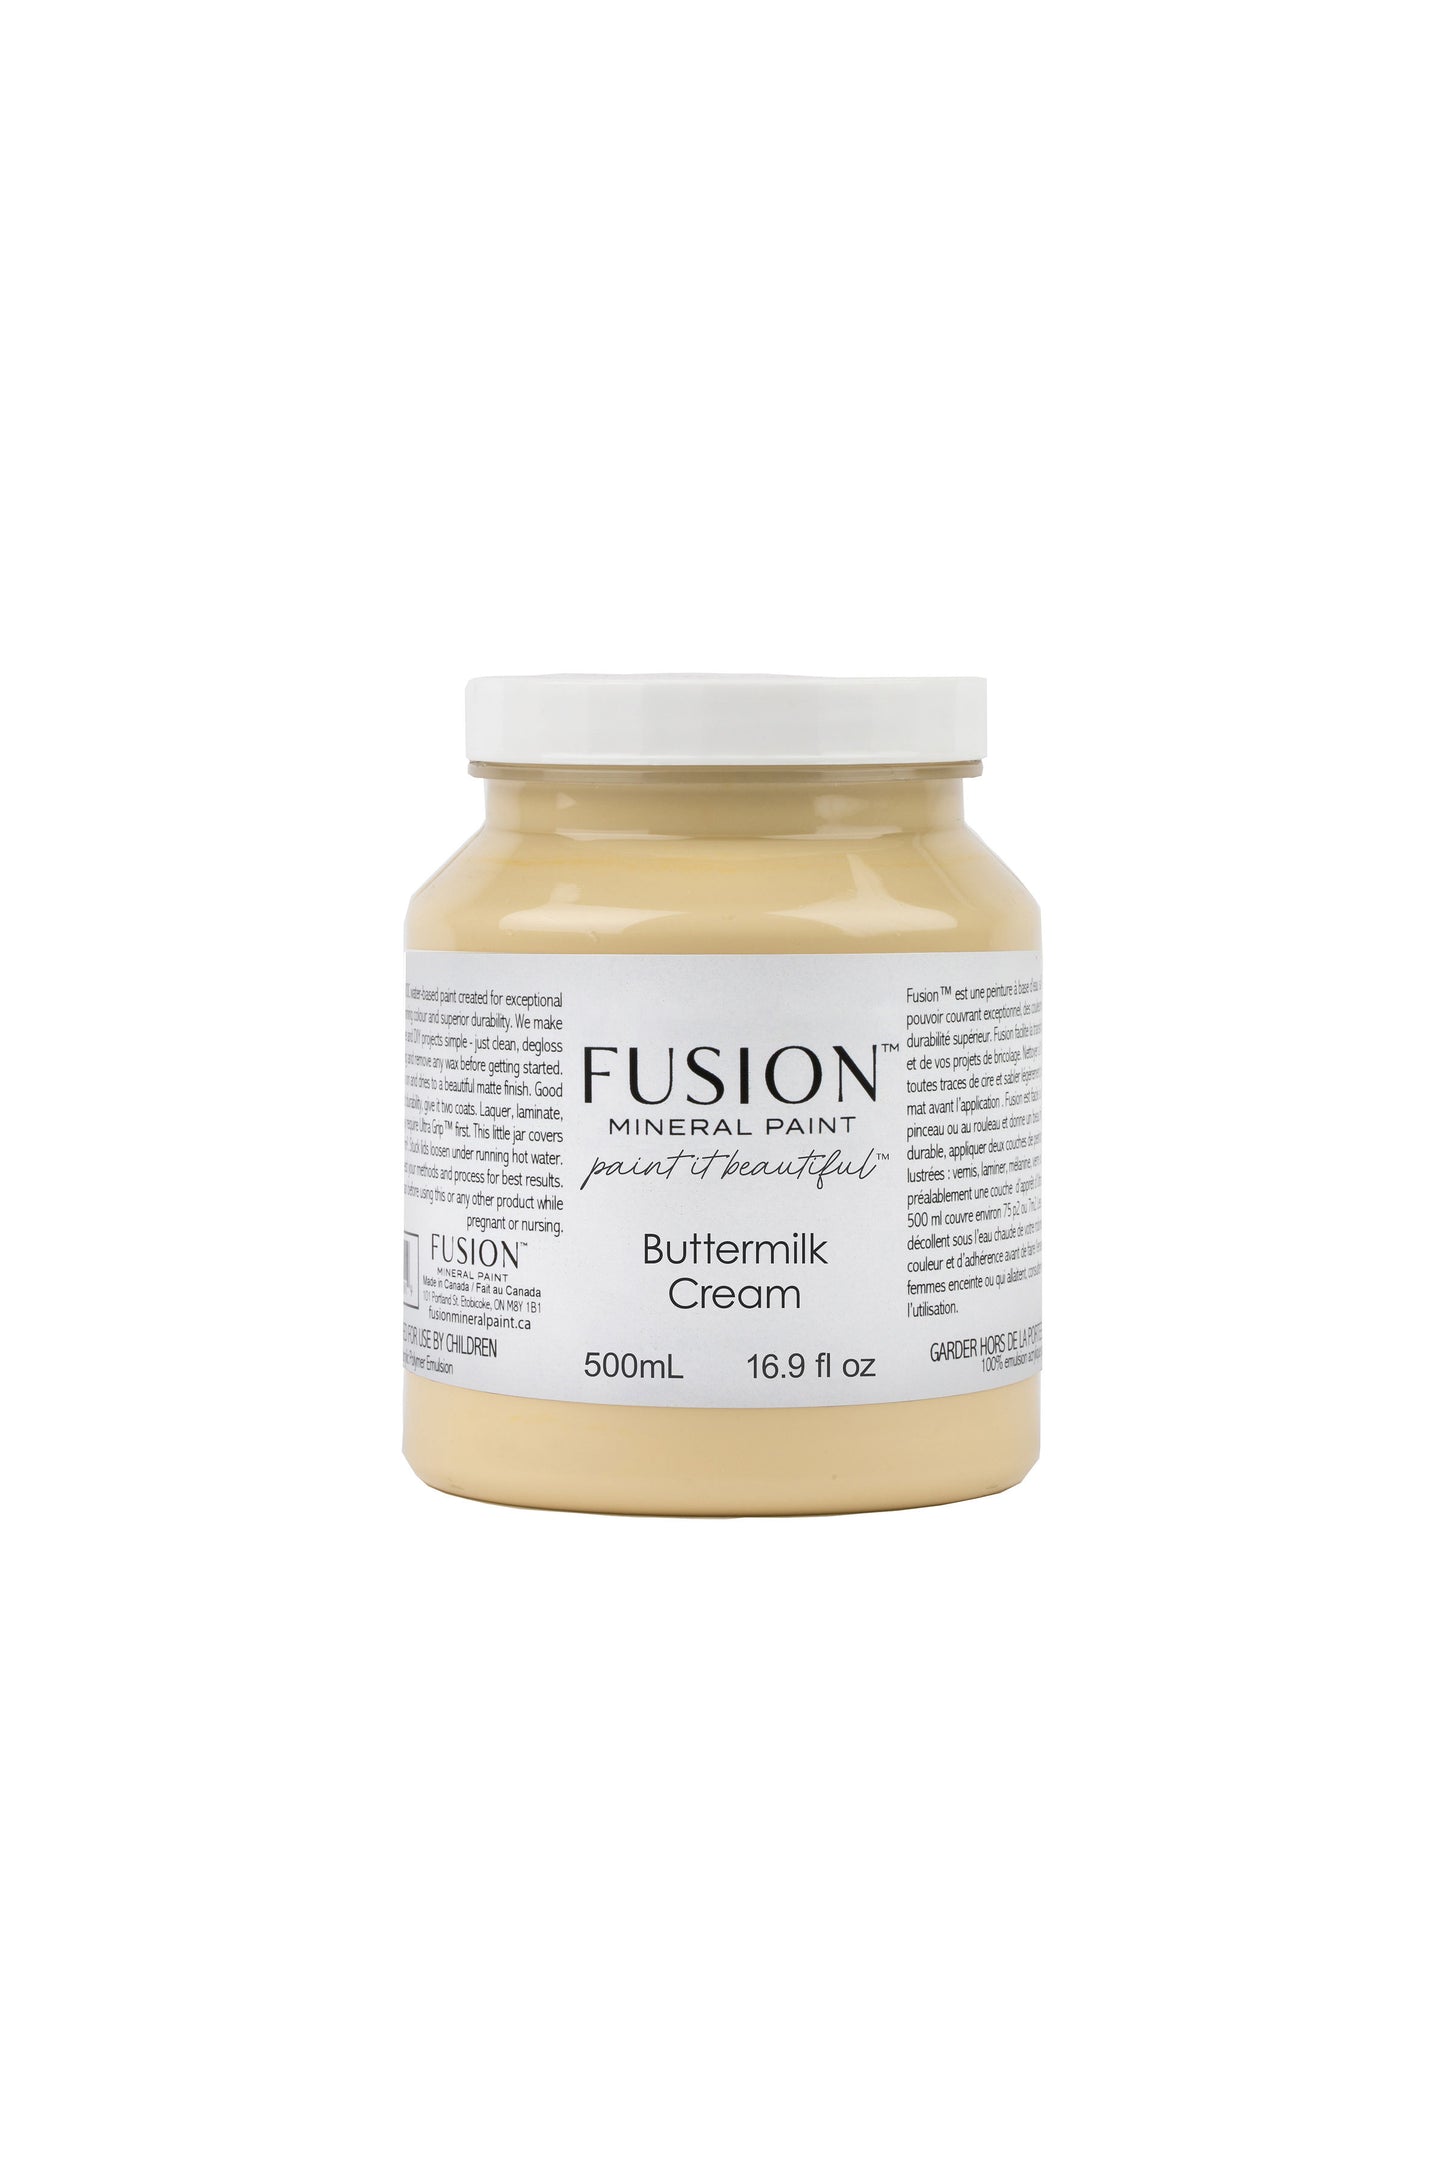 FUSION MINERAL PAINT- Buttermilk Cream